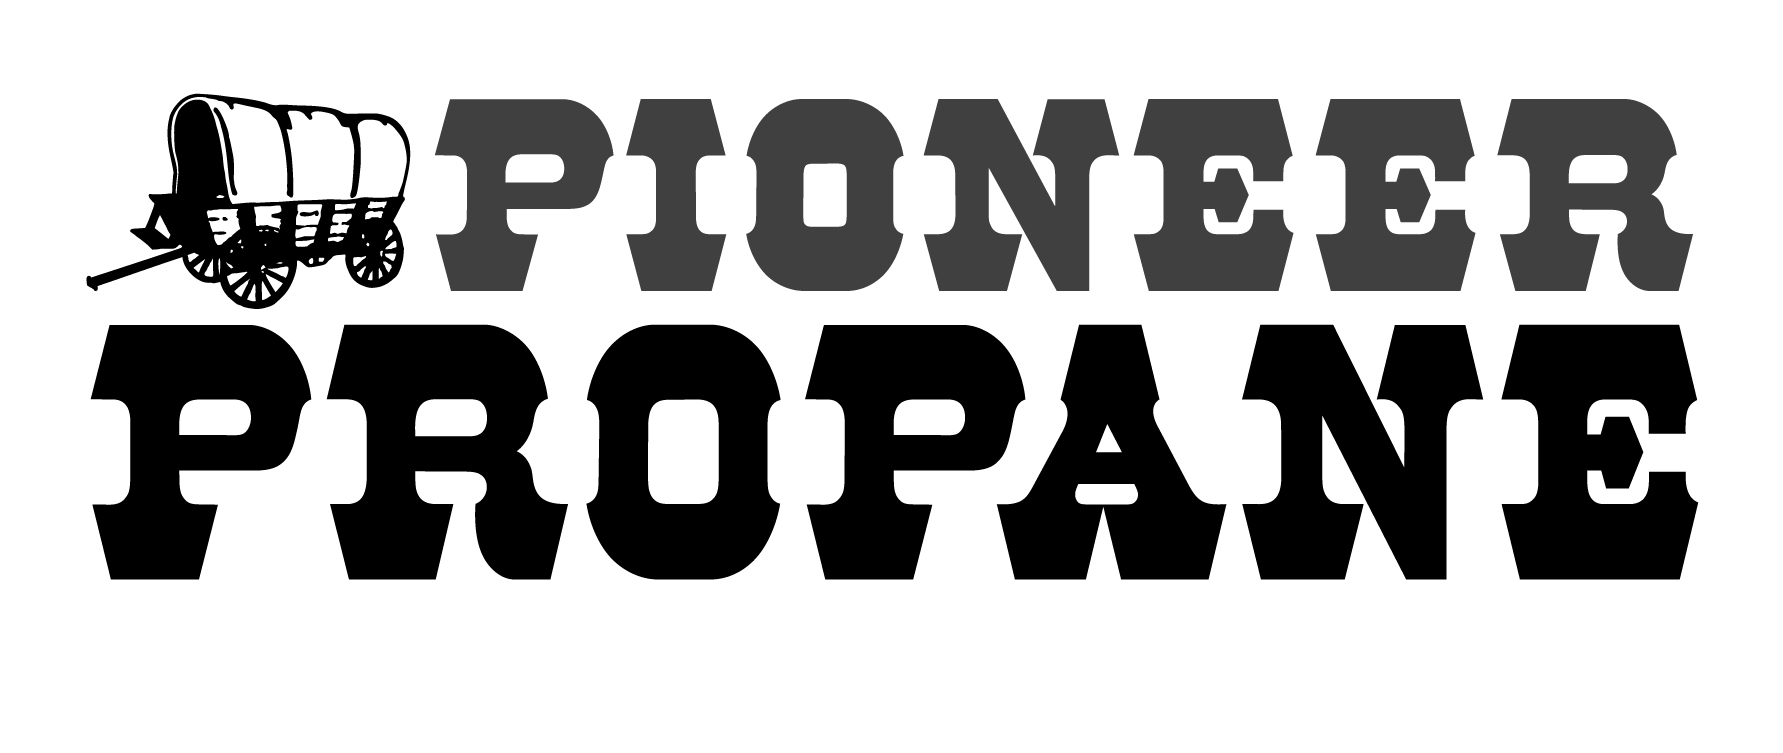 Pioneer Propane